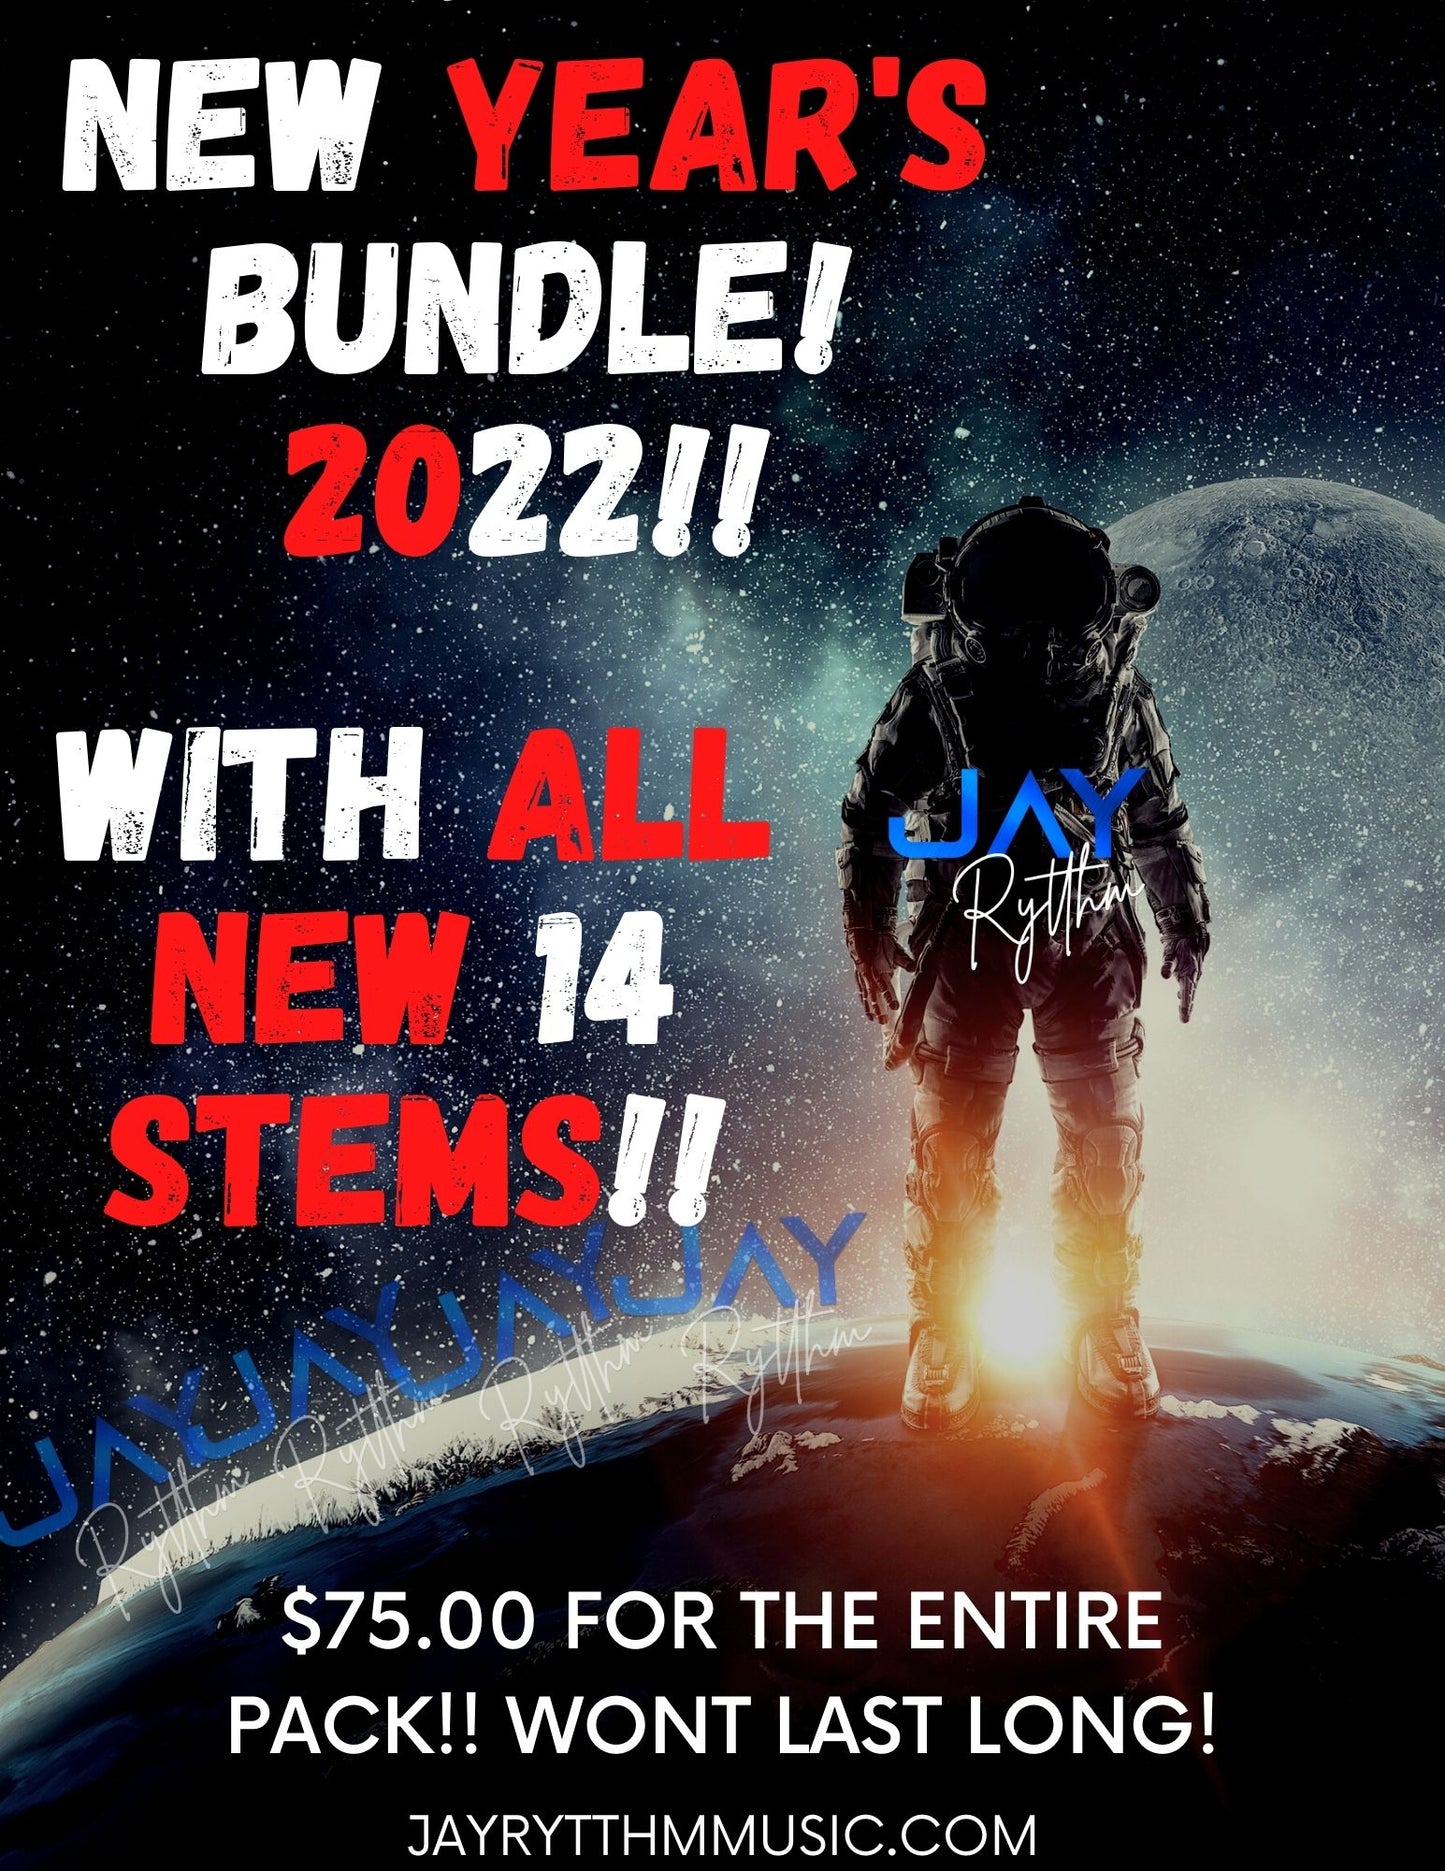 New Year's SHOUT STEM Bundle 2022!